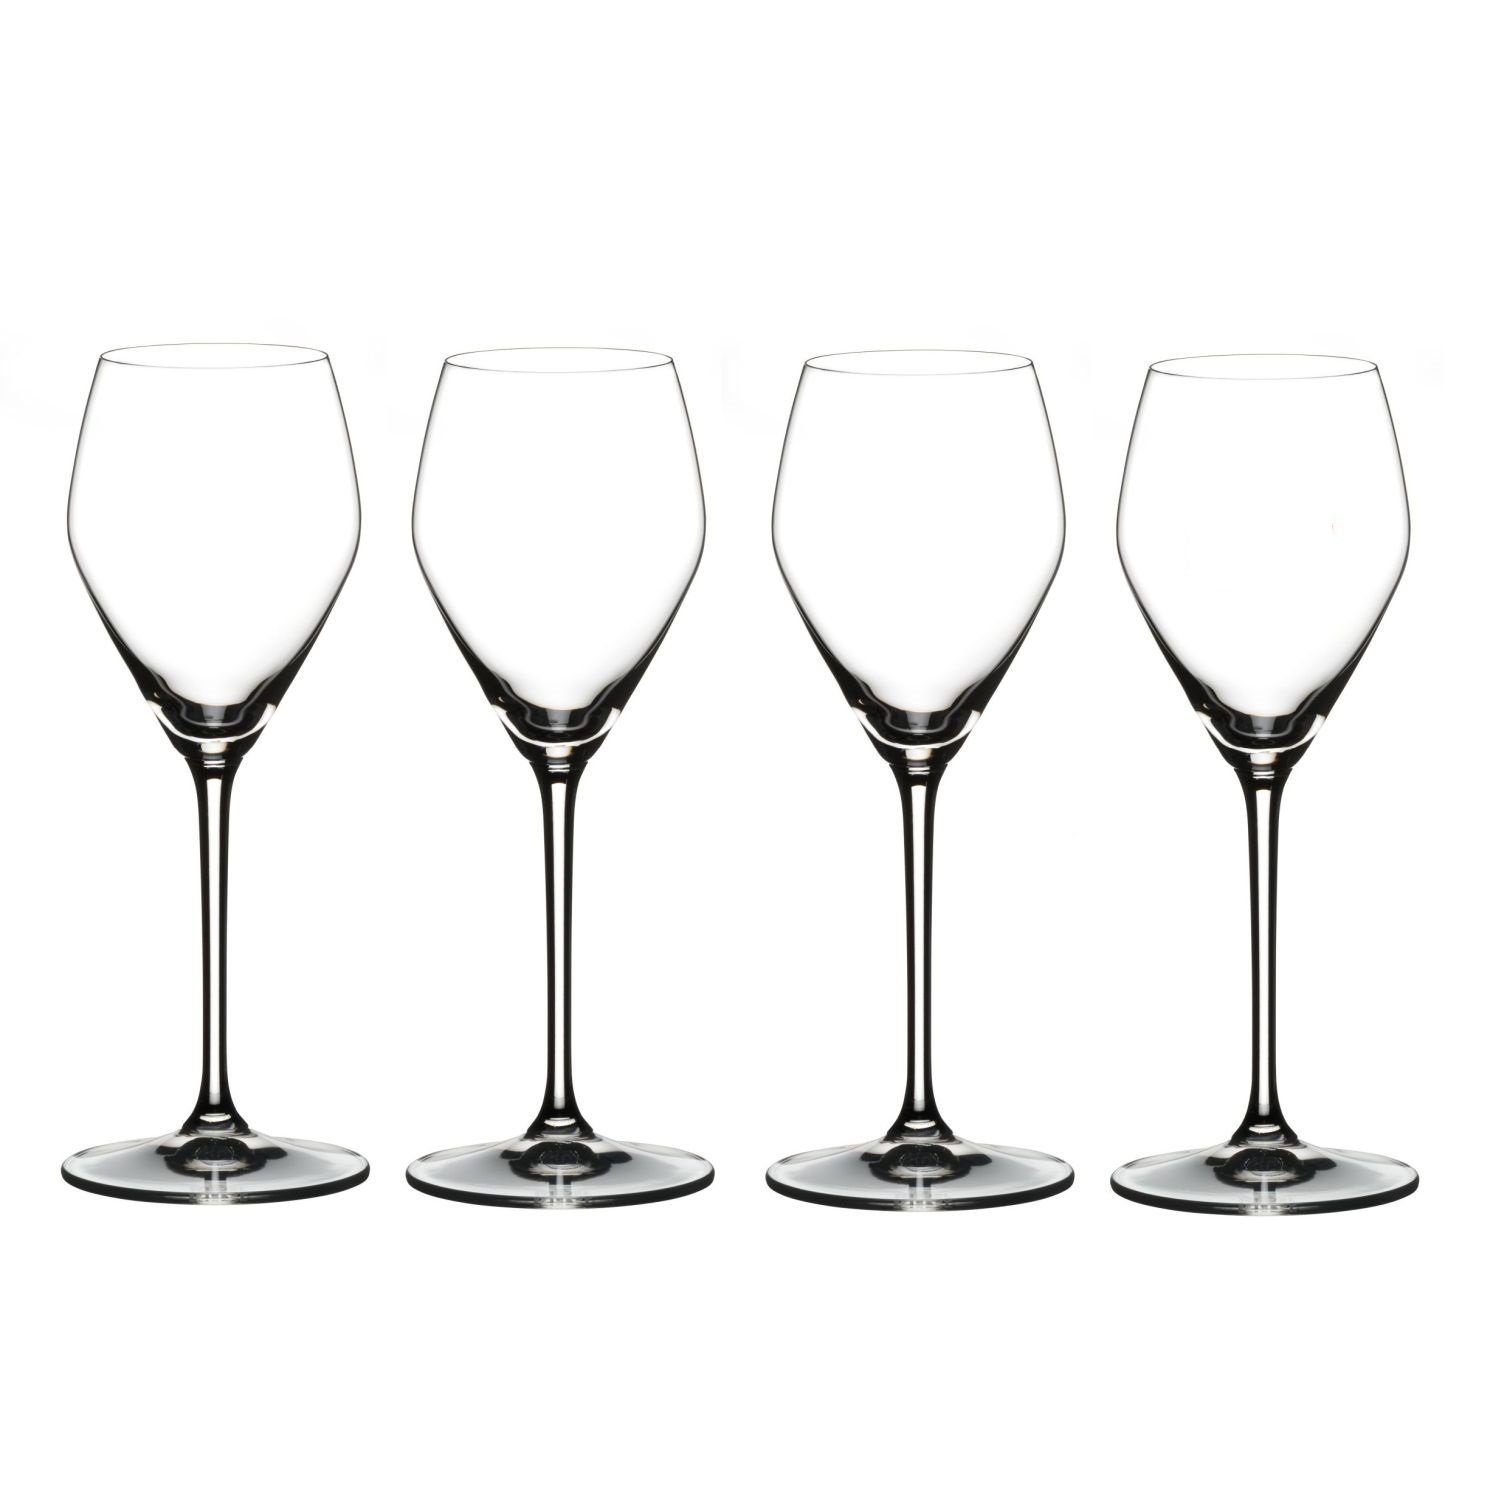 RIEDEL Glas Weinglas Extreme Rosé / Champagne 4er Set, Kristallglas | Gläser